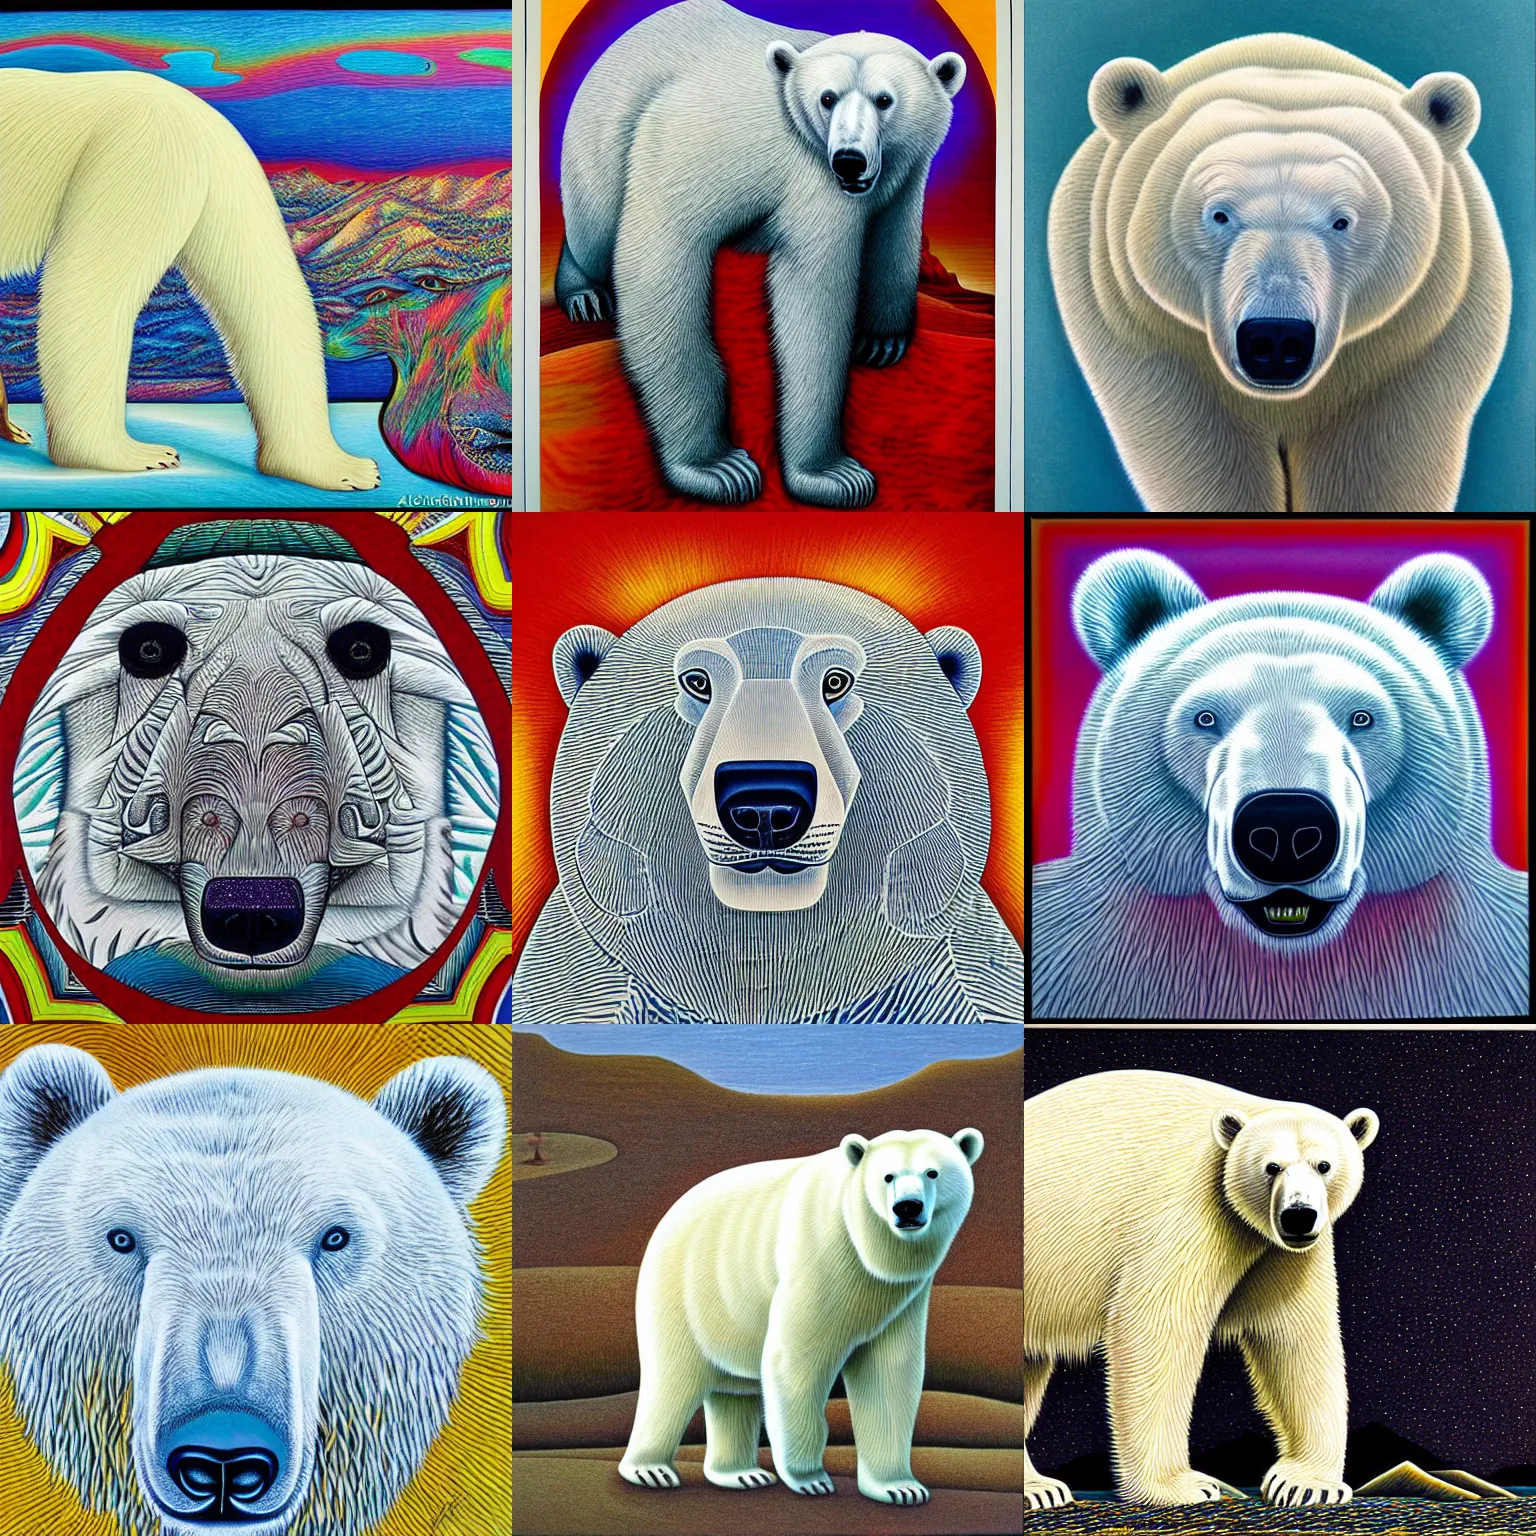 Prompt: a polar bear by alex grey